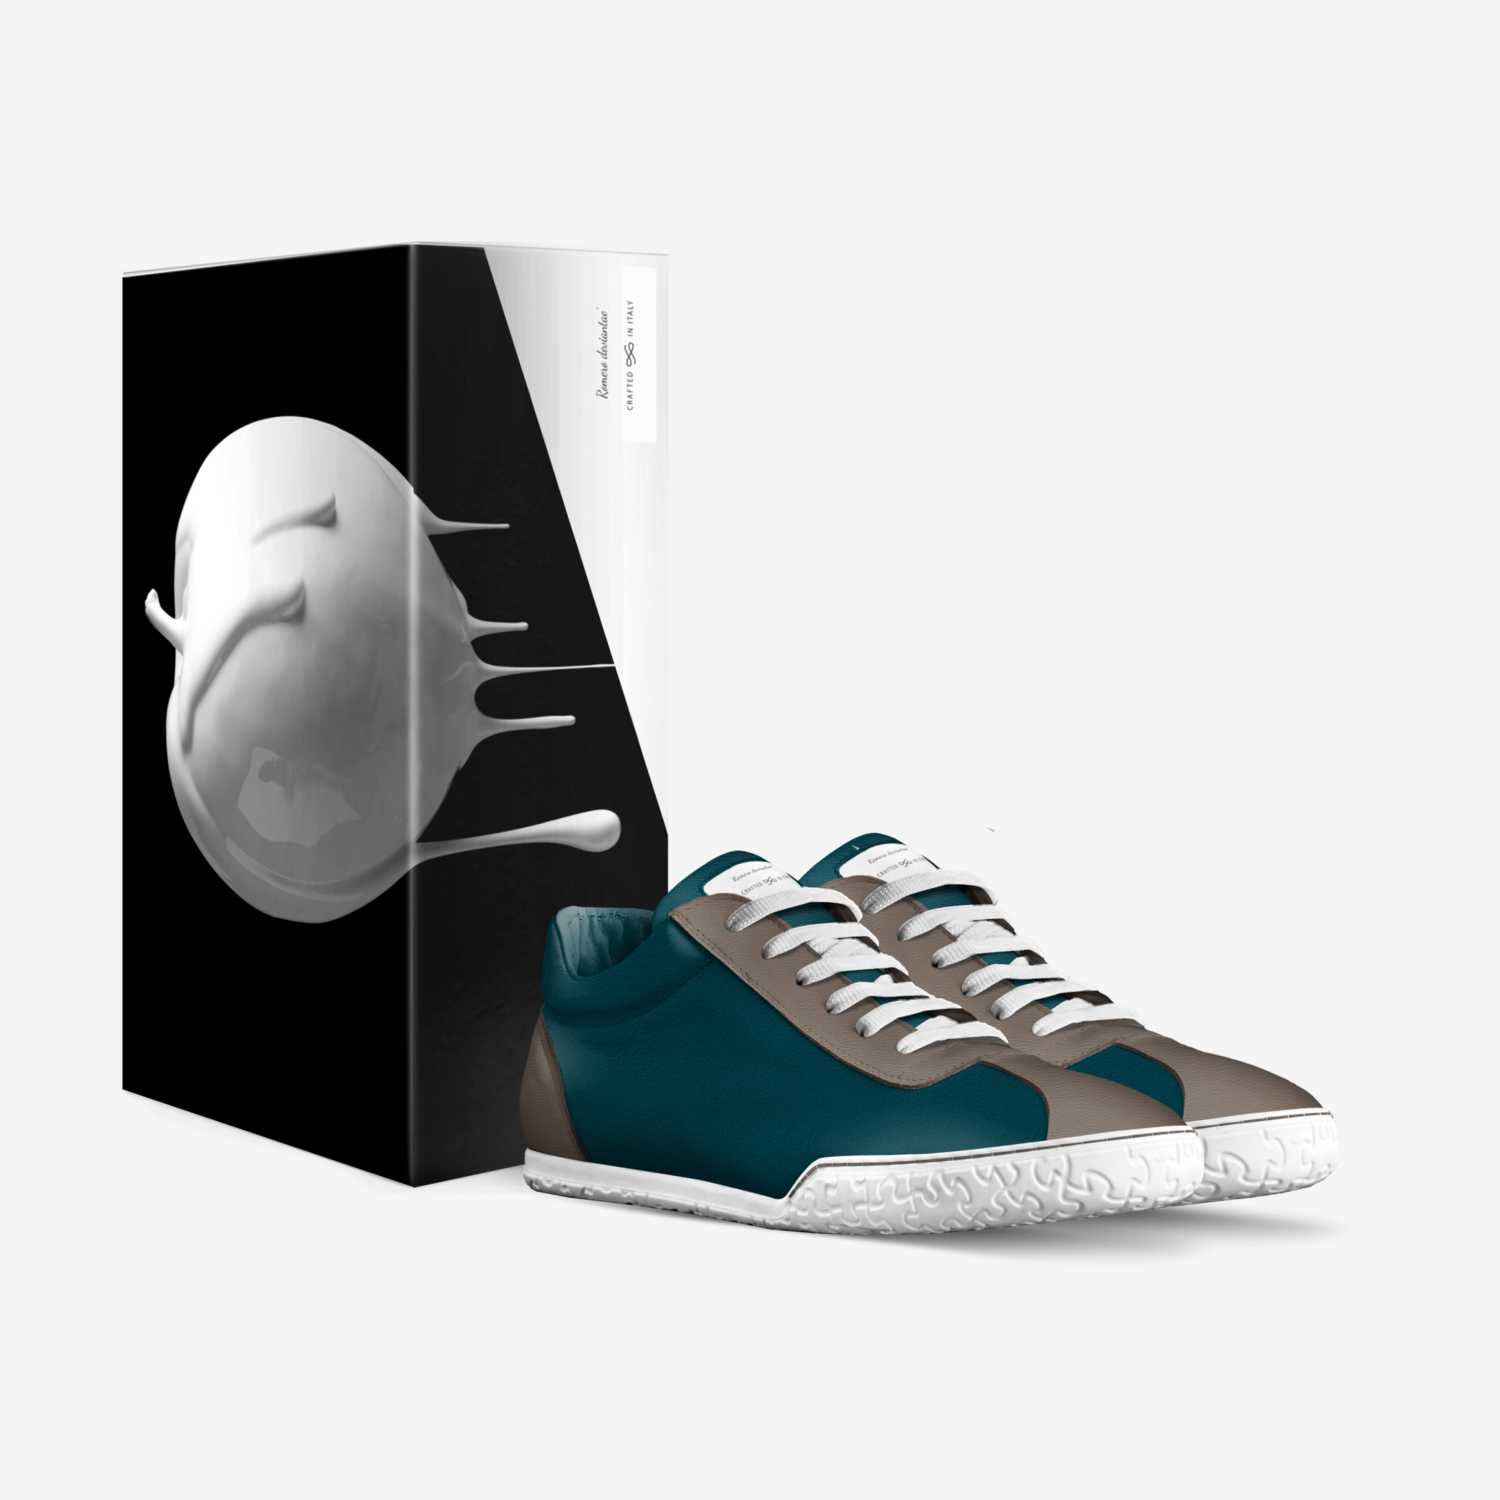 Romero deviantae' custom made in Italy shoes by Shoderoe | Box view